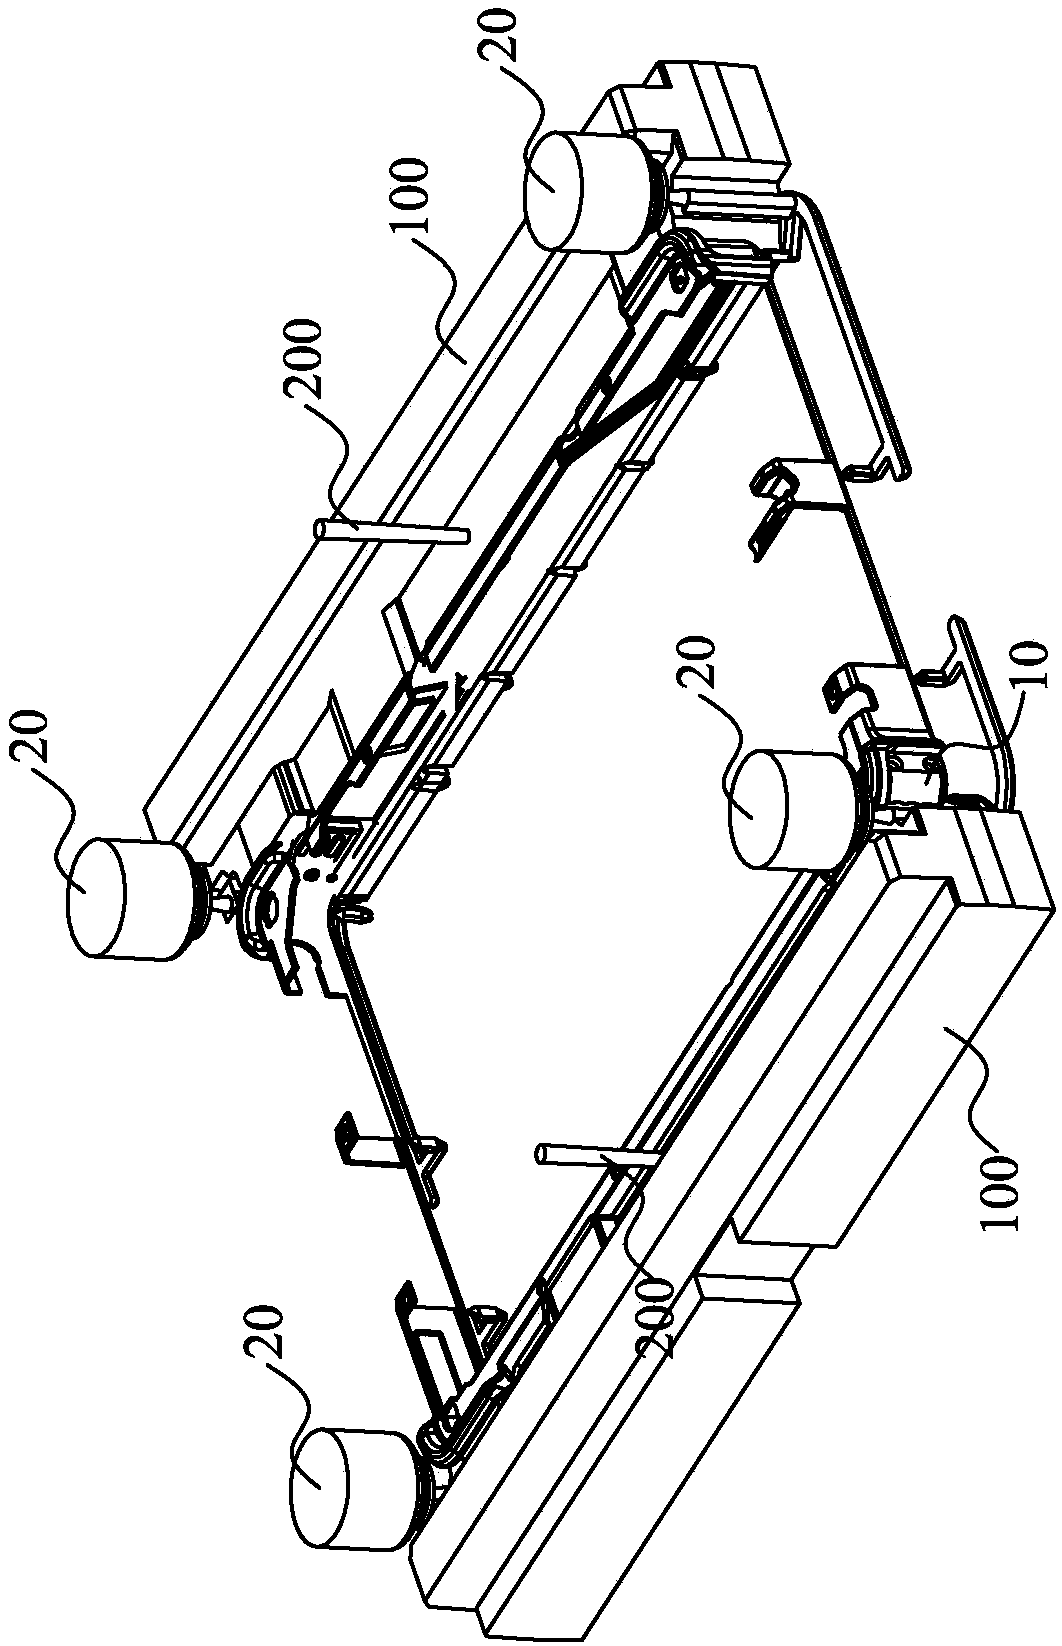 Slide block plastic injection structure